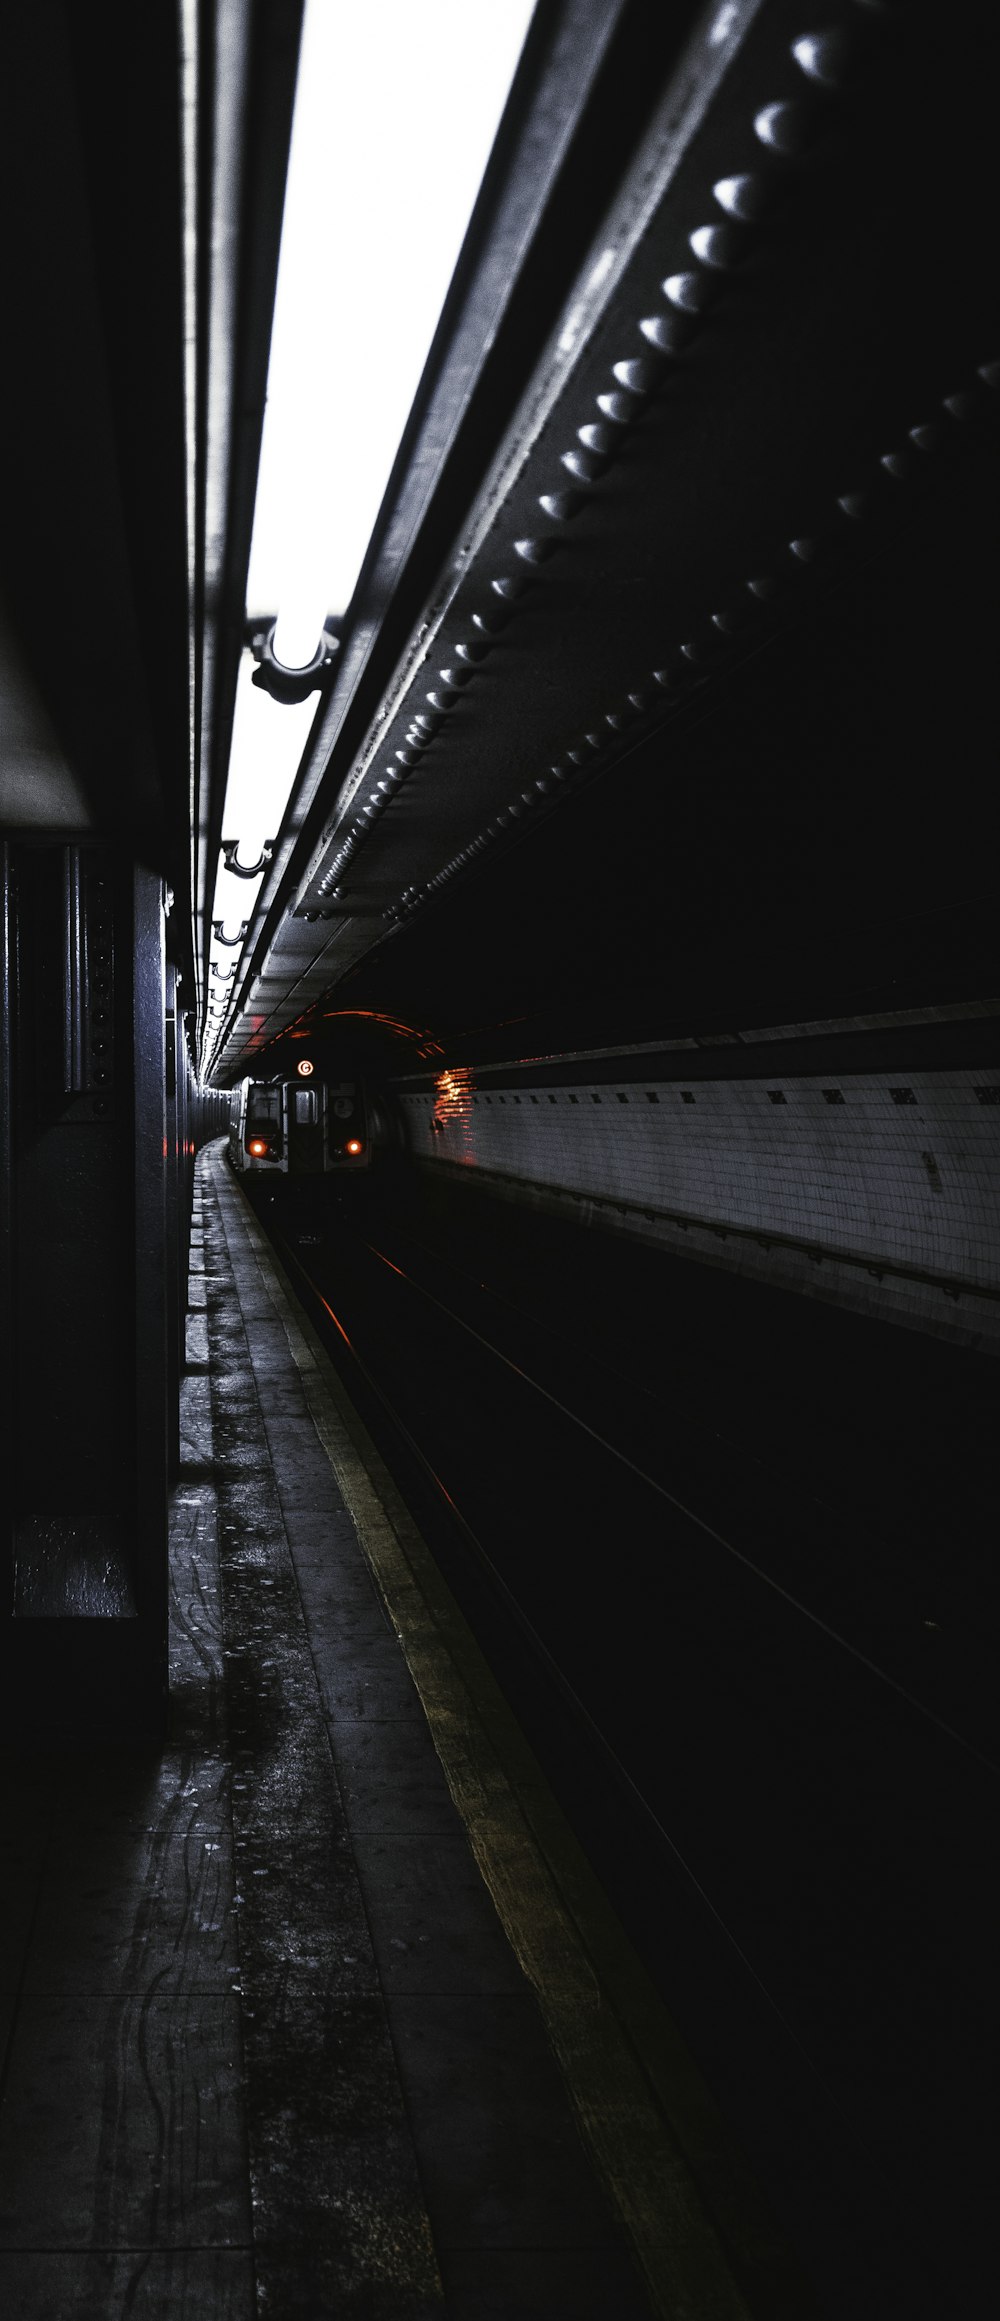 trem passando no túnel